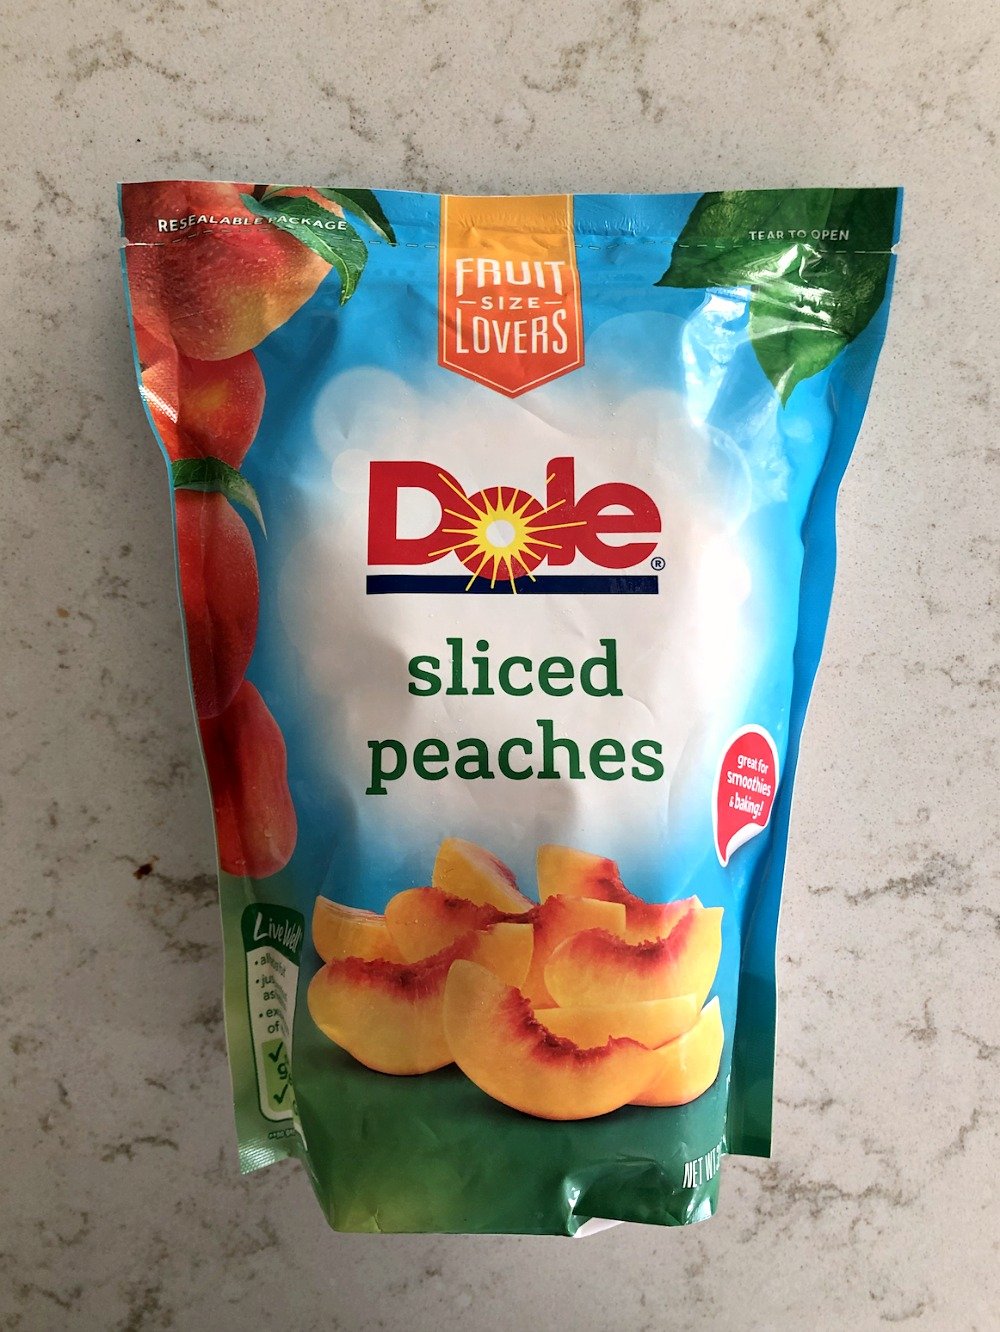 Bag of frozen sliced peaches